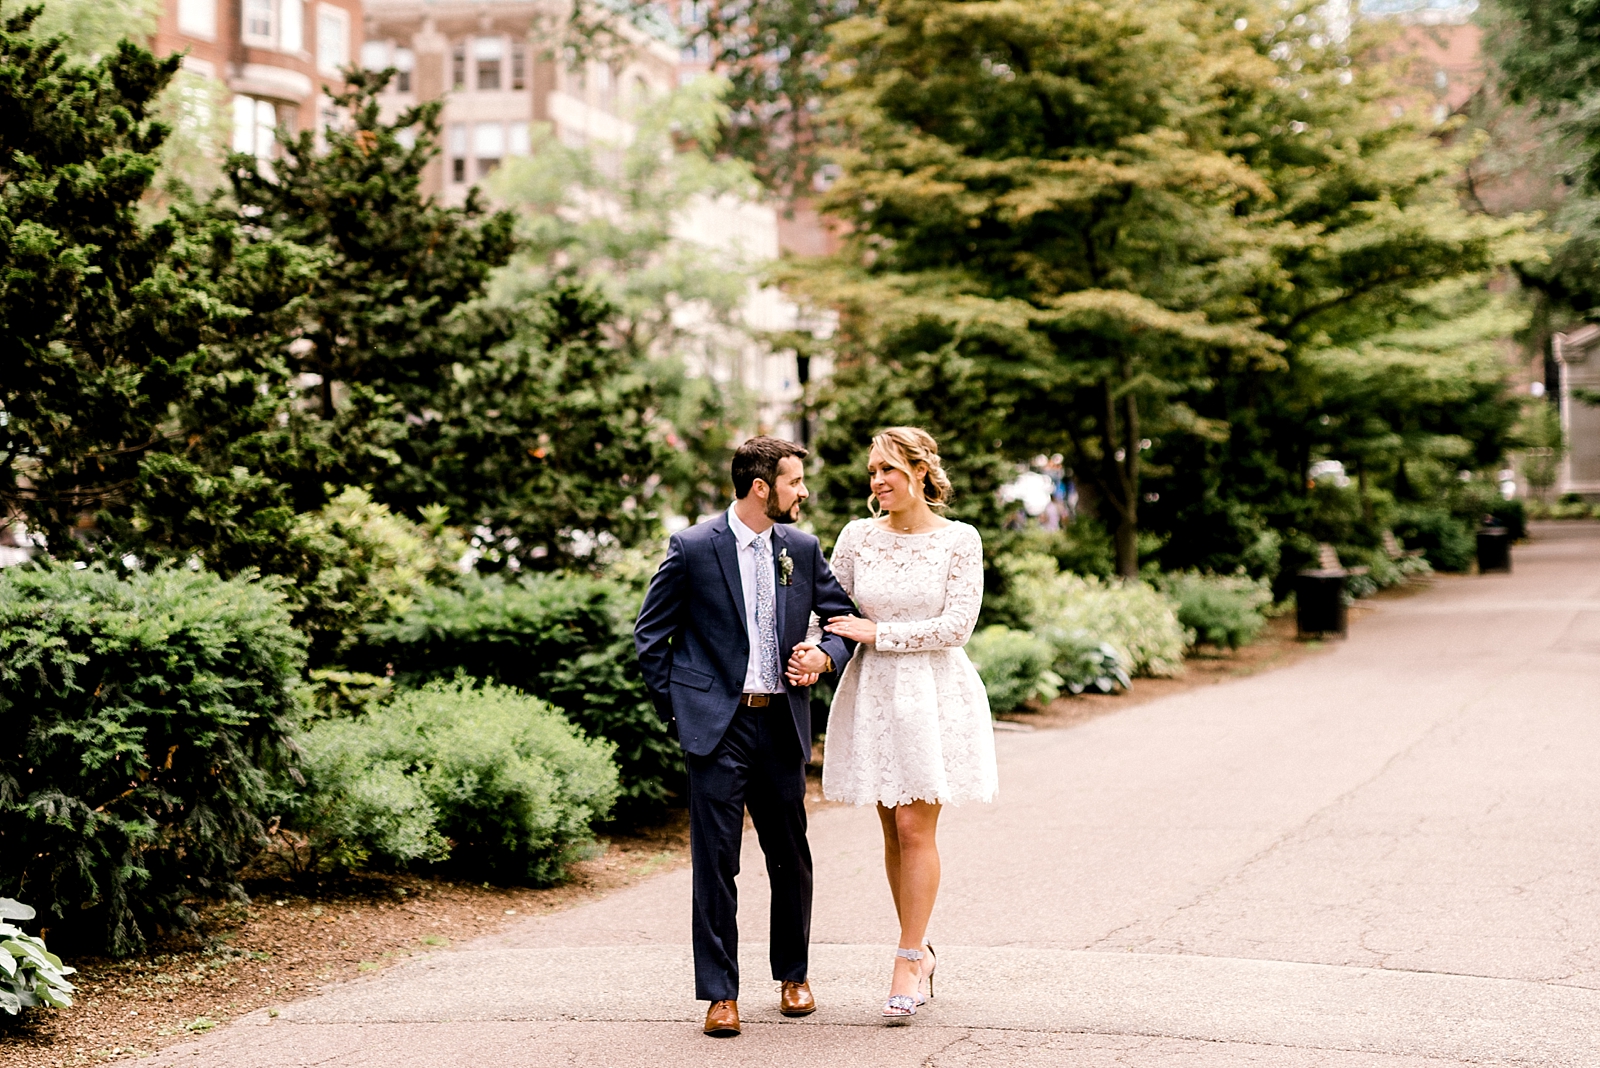 Summer Elopement at Boston City Hall with Boston Public Garden Portraits by Wedding Photographer Annmarie Swift